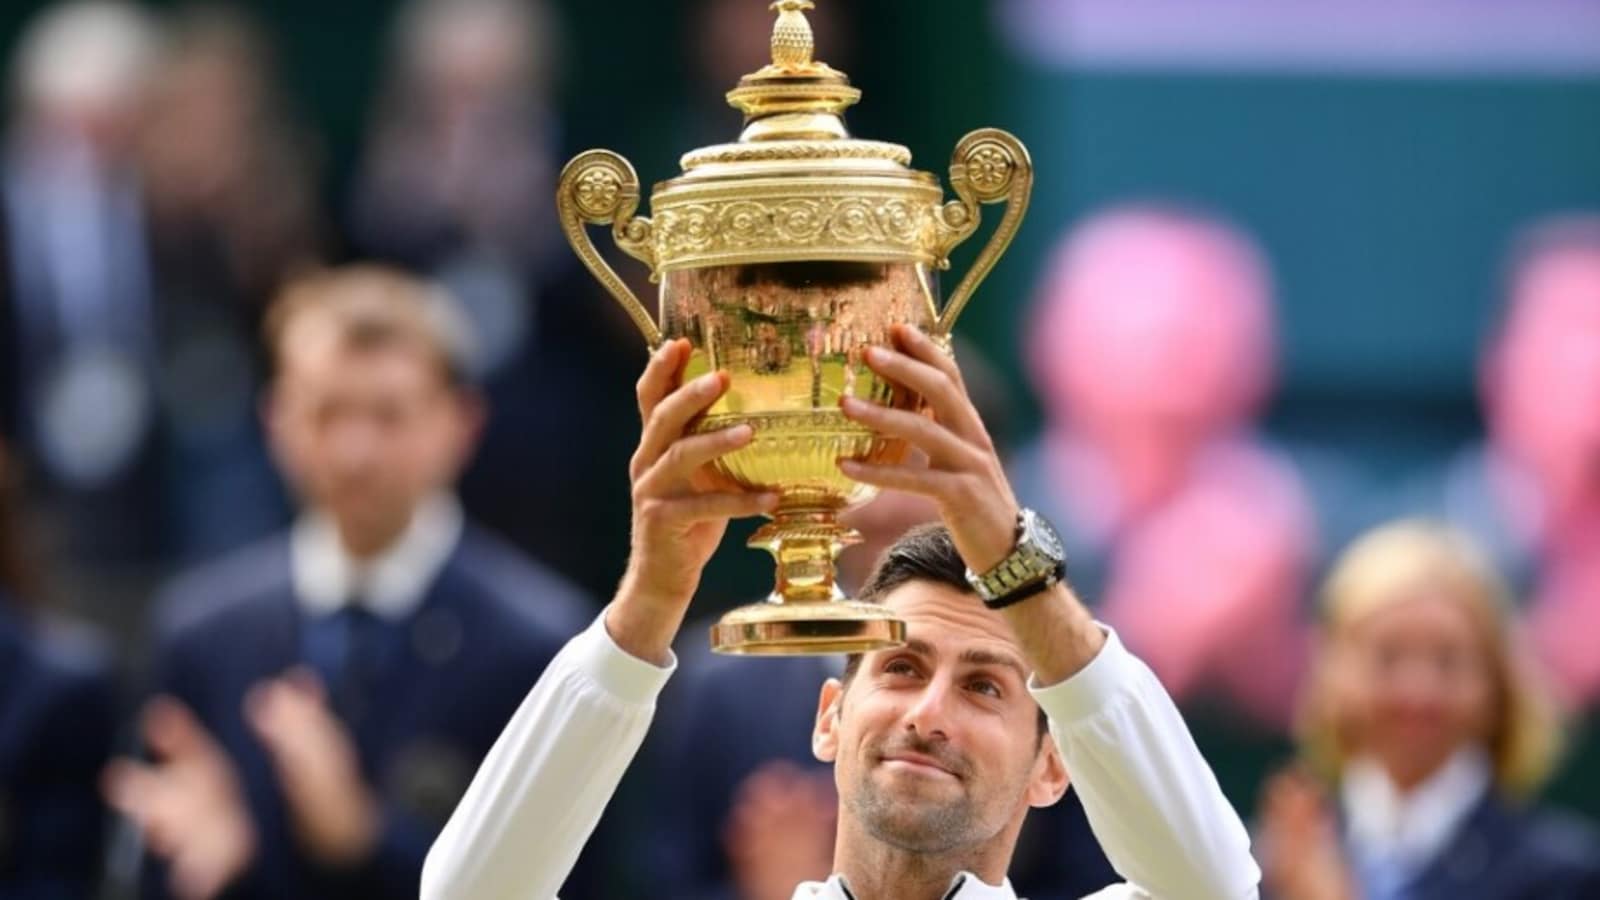 Wimbledon 2021 Final: Novak Djokovic's Win Loss History And Track Record In Wimbledon Finals